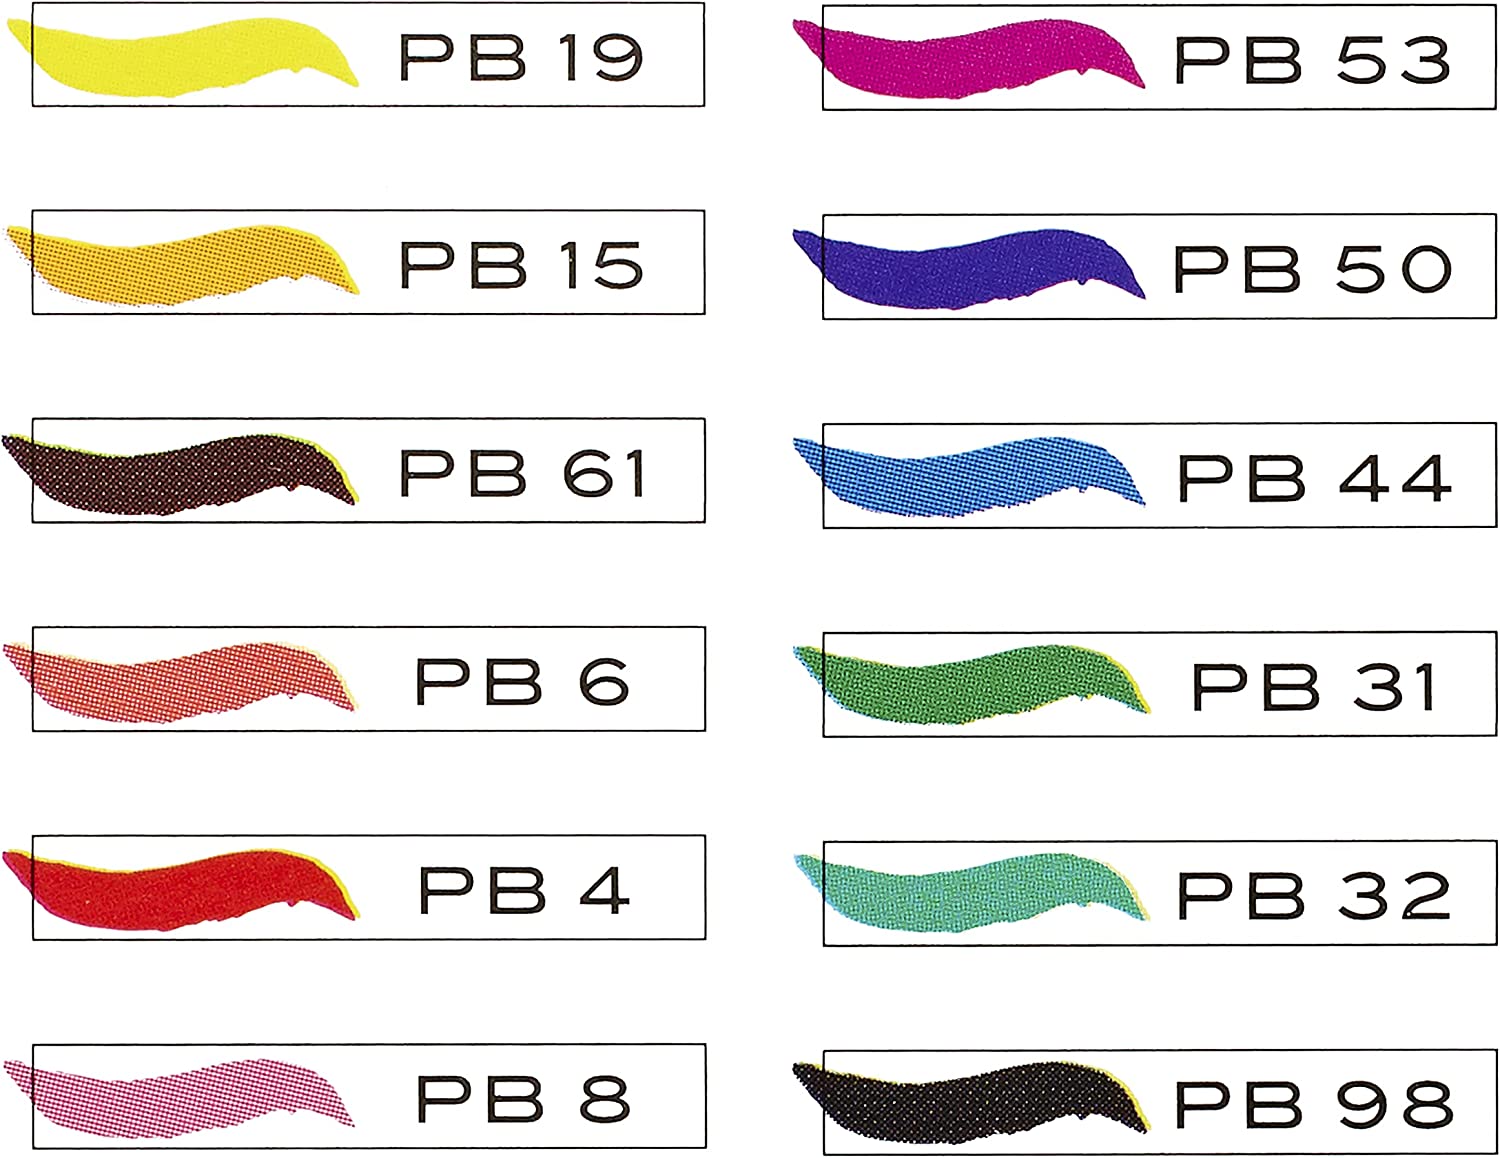 Prismacolor Premier Double-Ended Art Markers & Sets